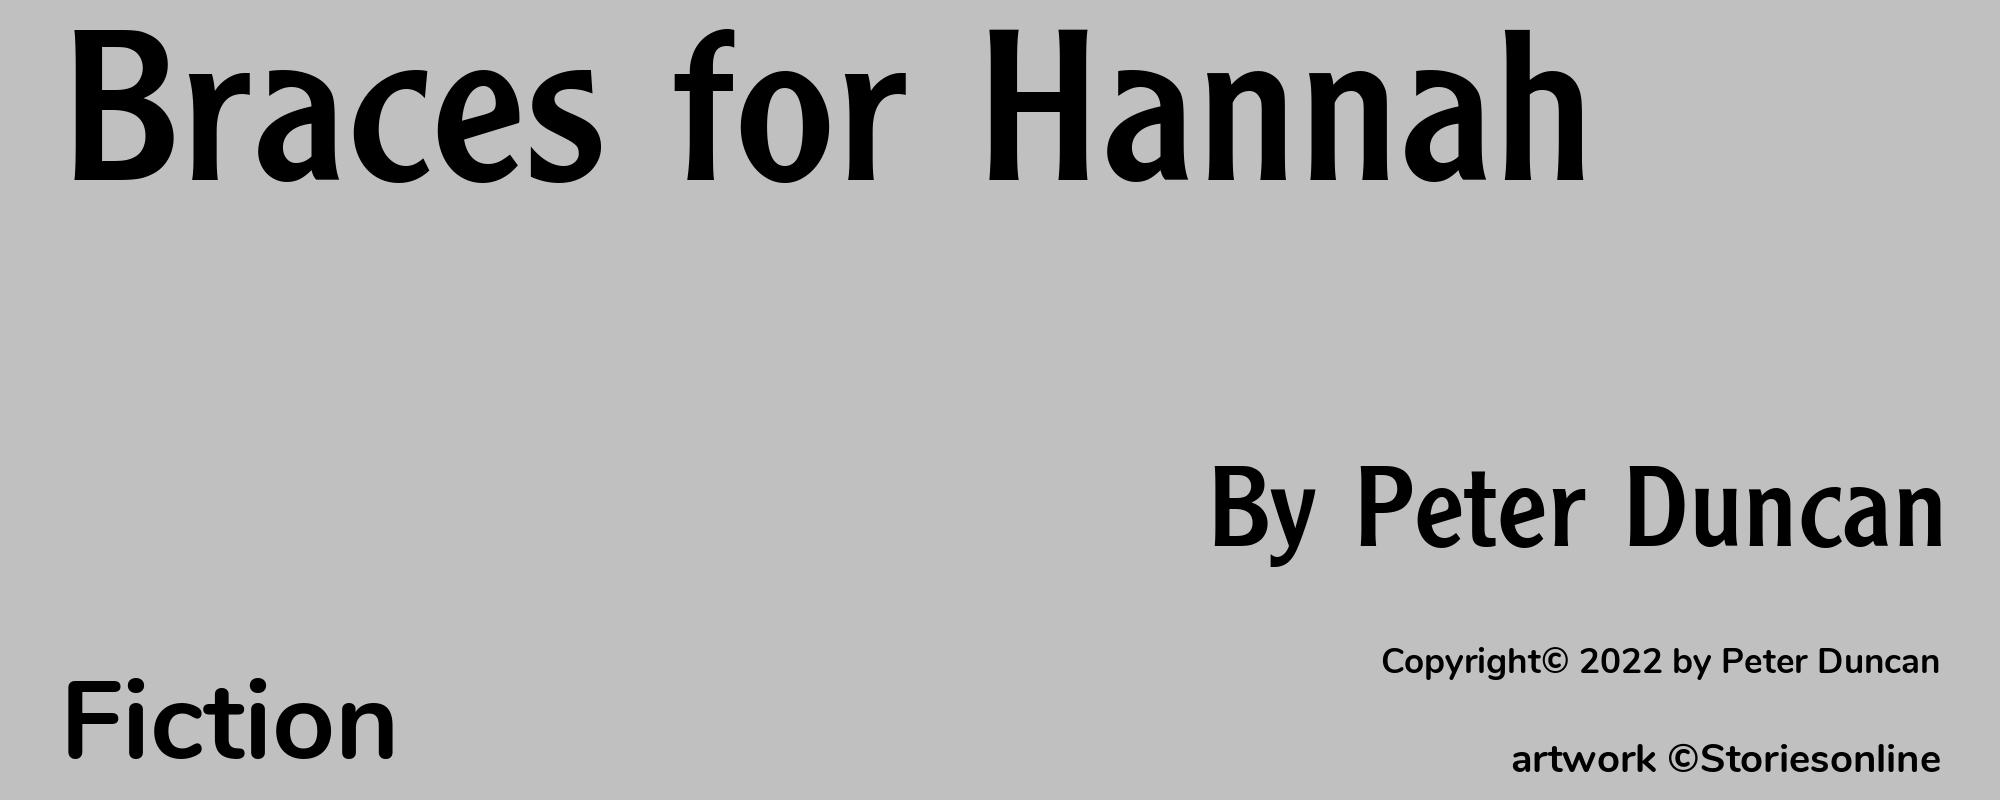 Braces for Hannah - Cover